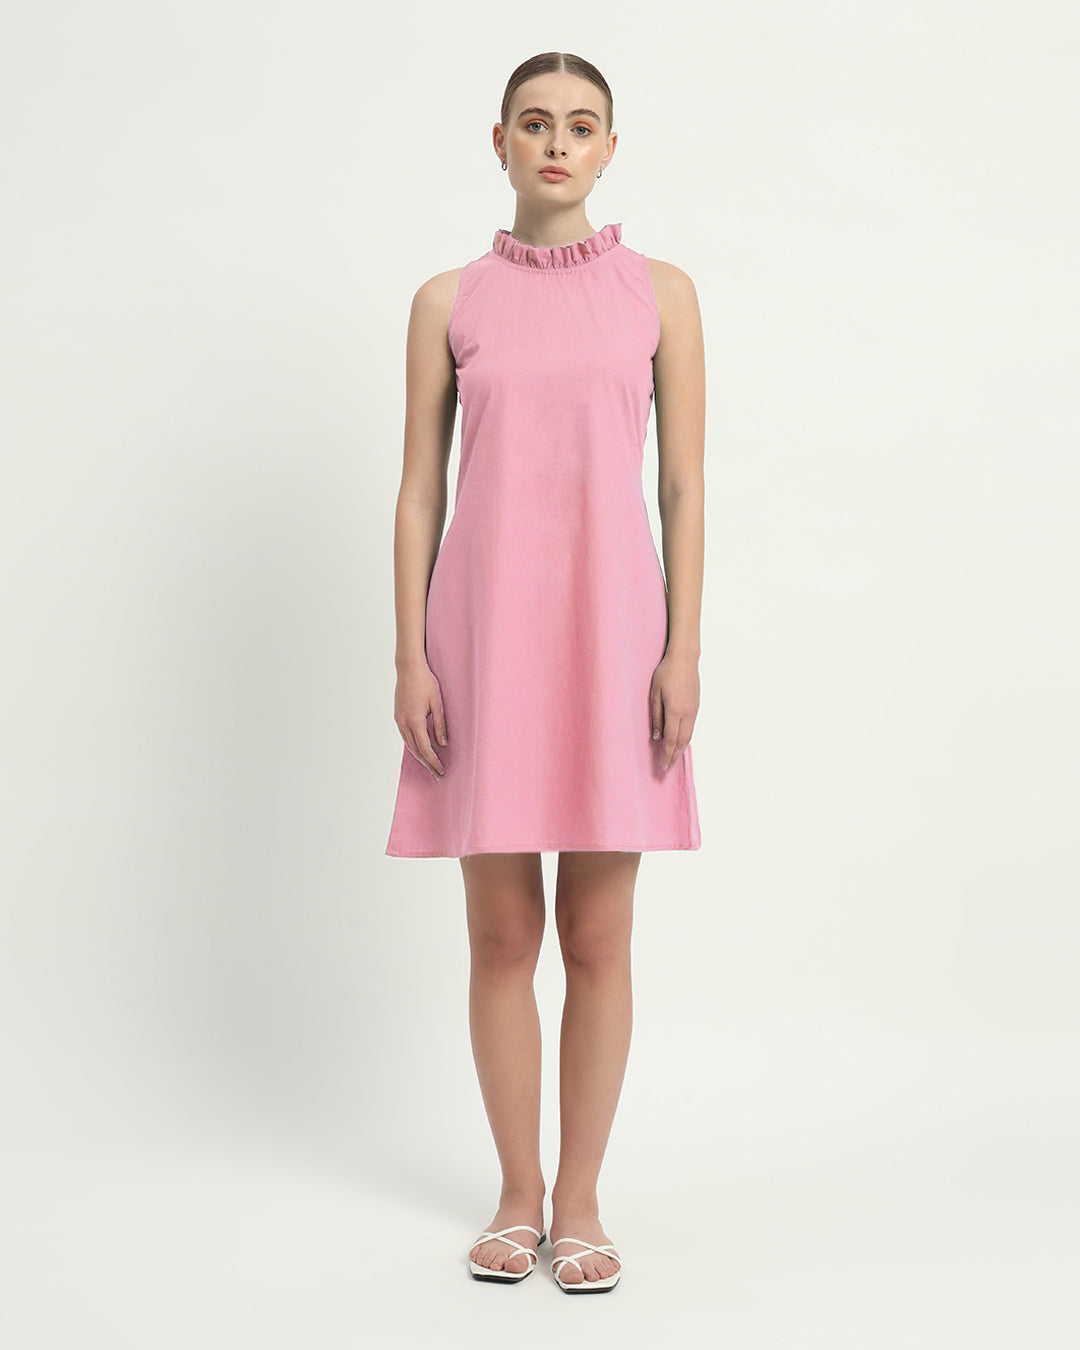 The Fondant Pink Angelica Cotton Dress